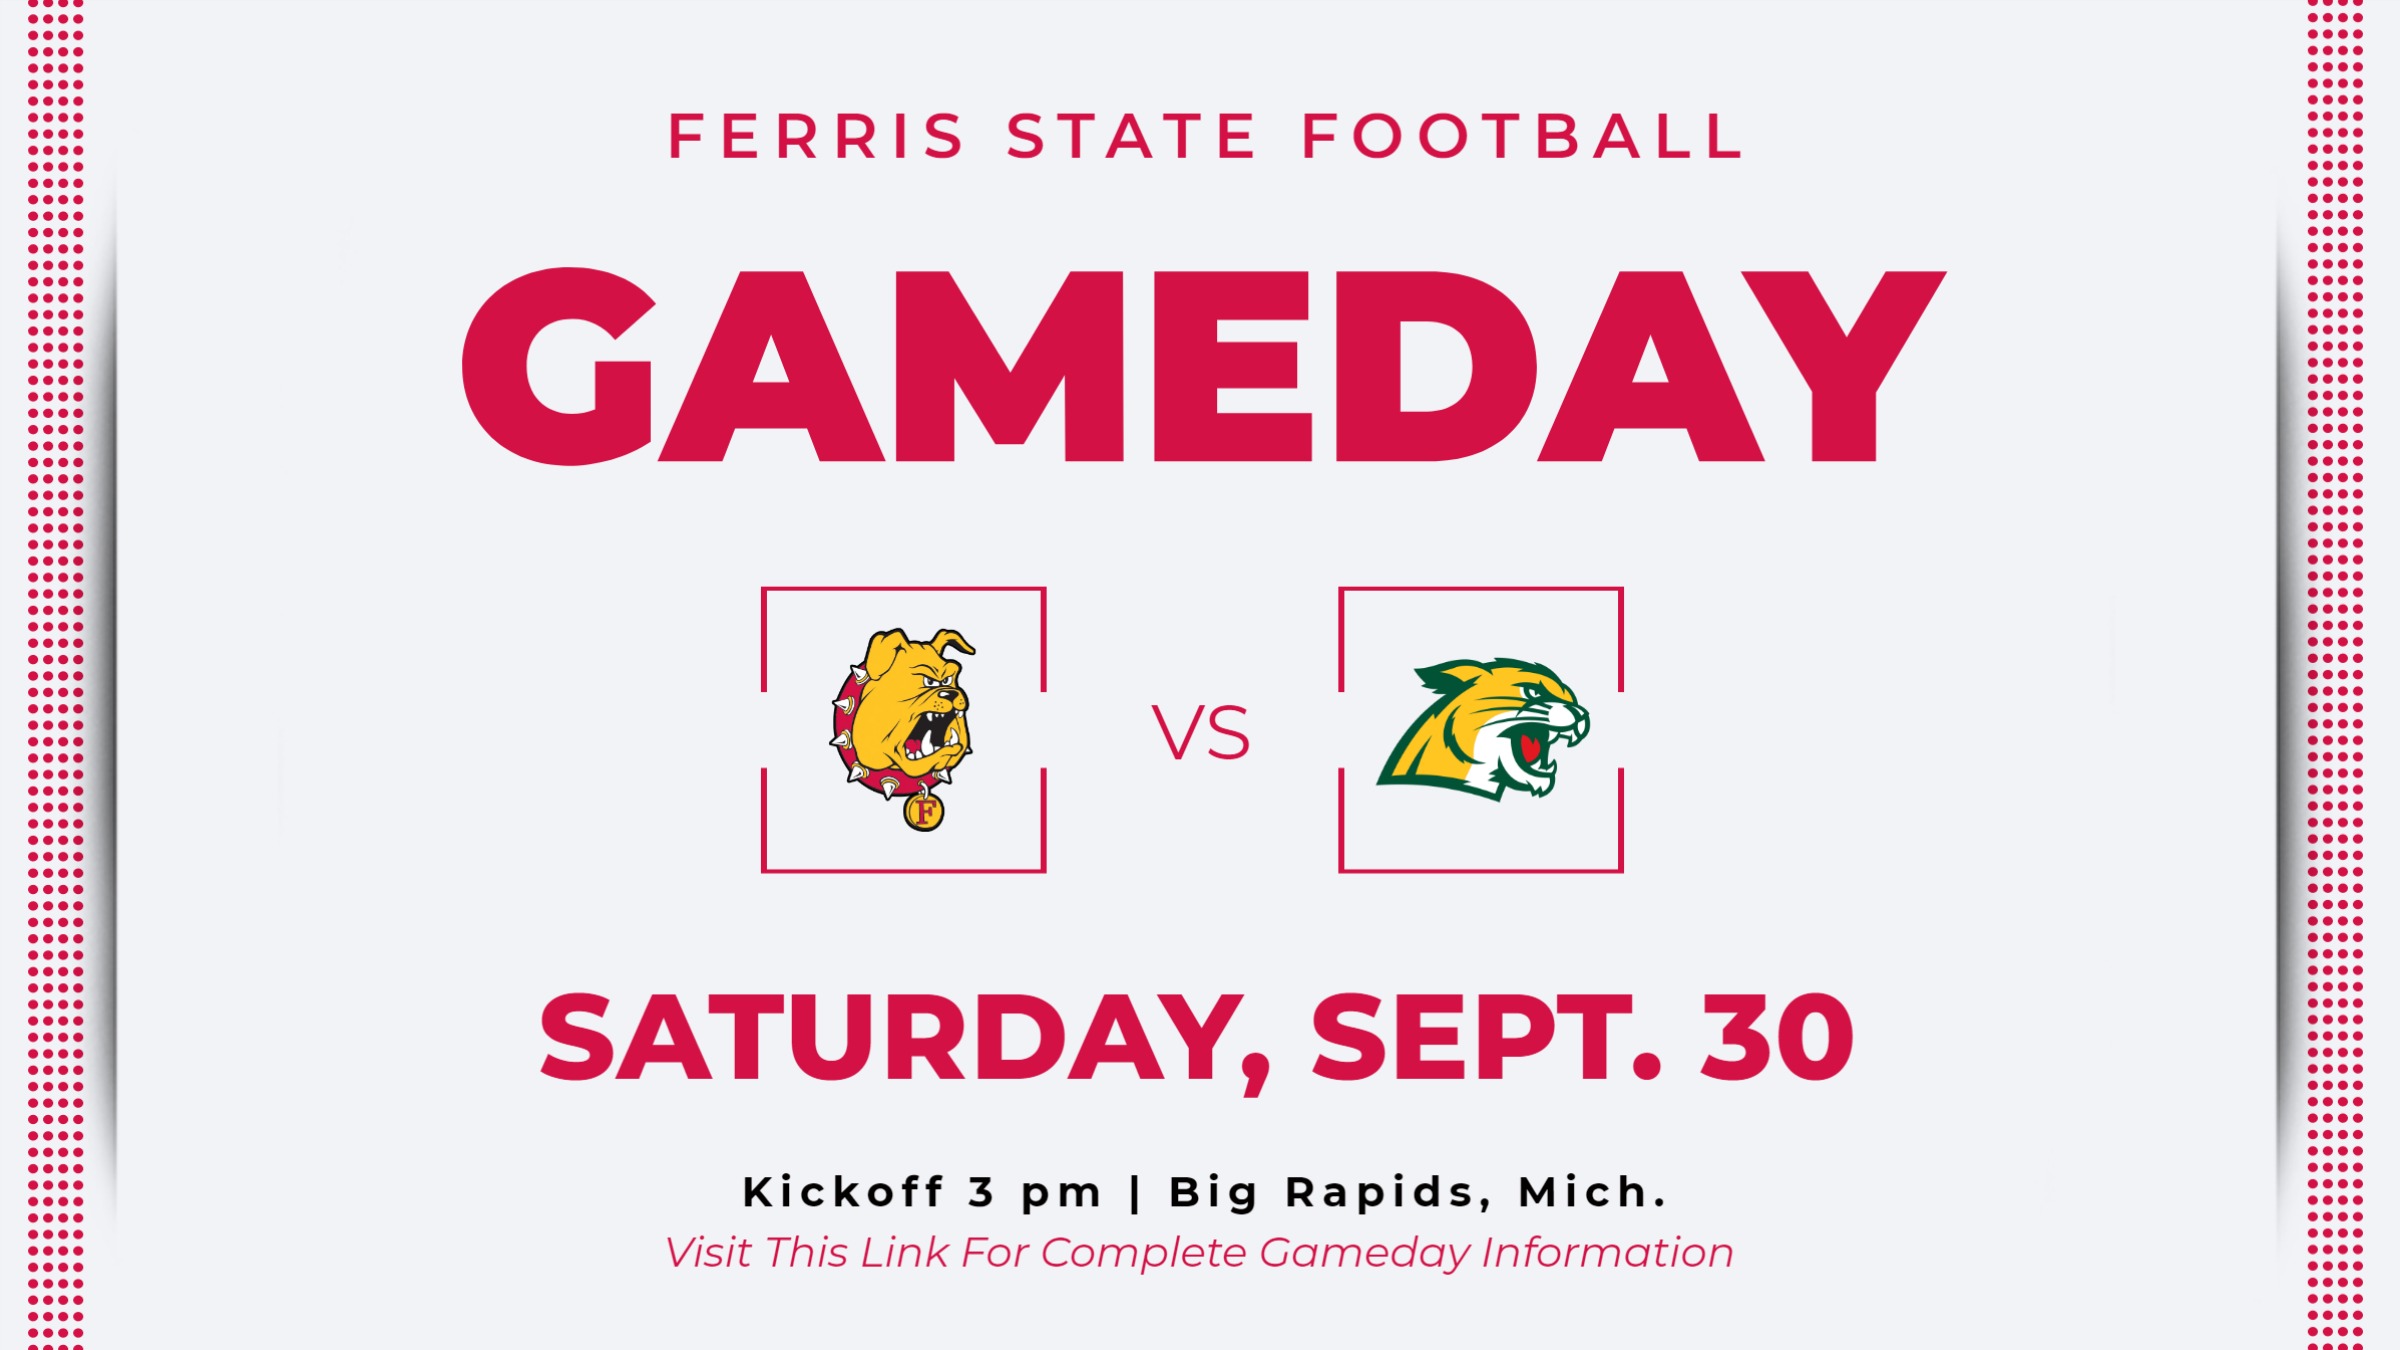 GAMEDAY: Ferris State vs Northern Michigan